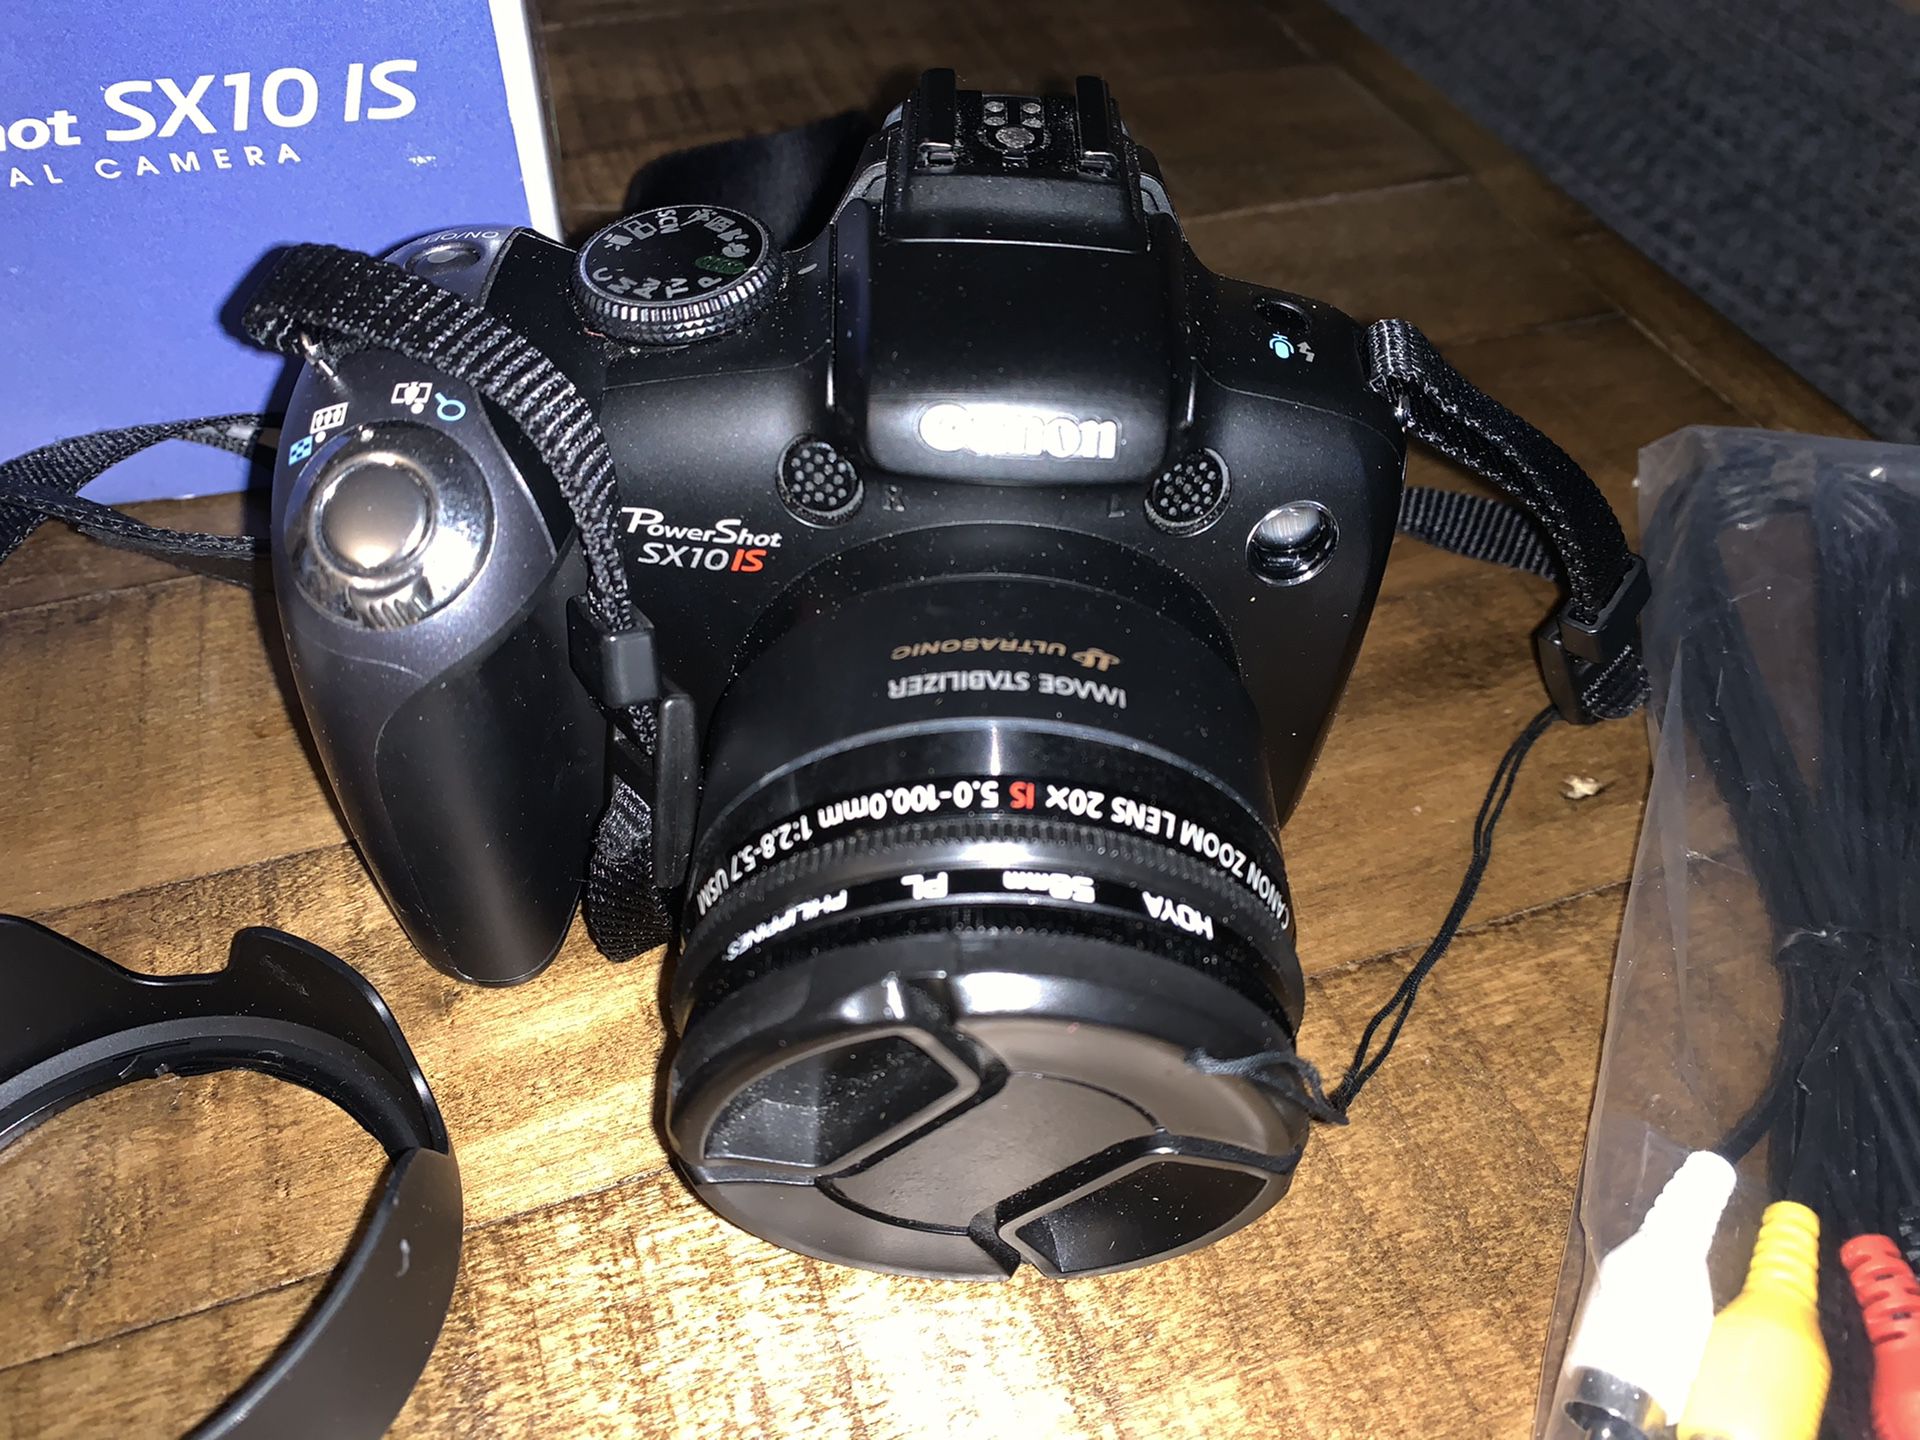 Canon PowerShot SX10 IS Digital Camera